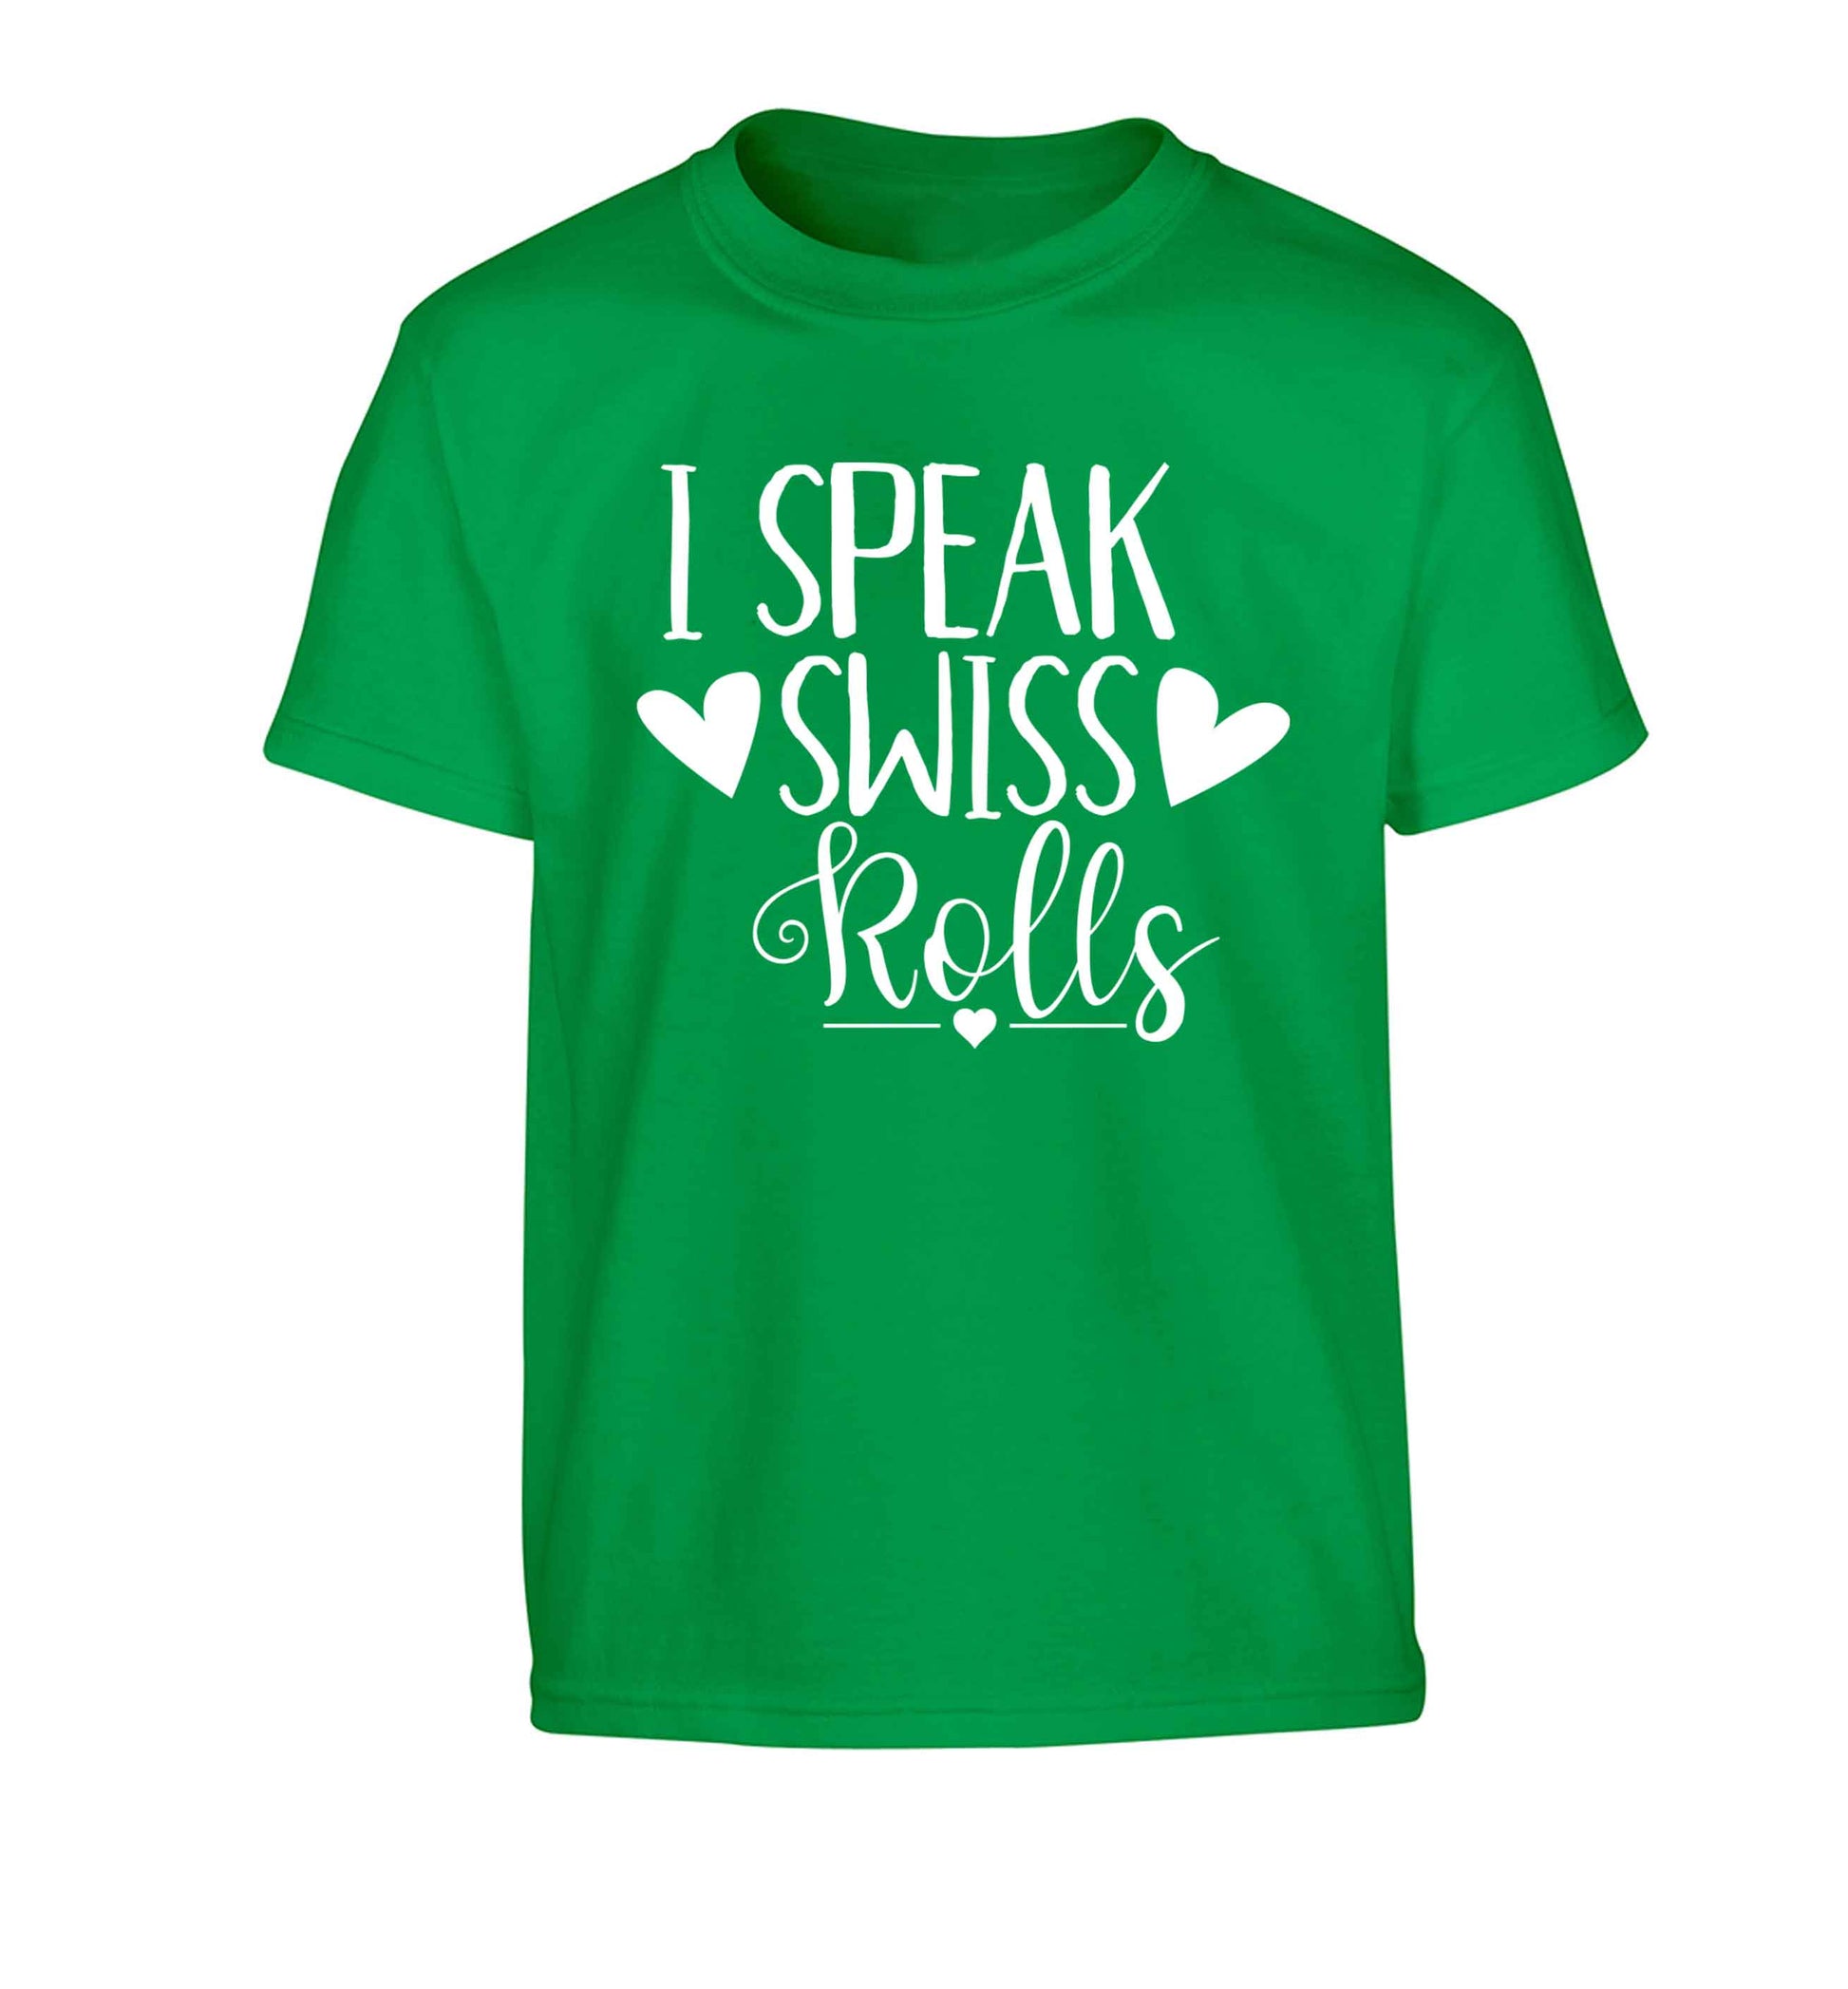 I speak swiss..rolls Children's green Tshirt 12-13 Years